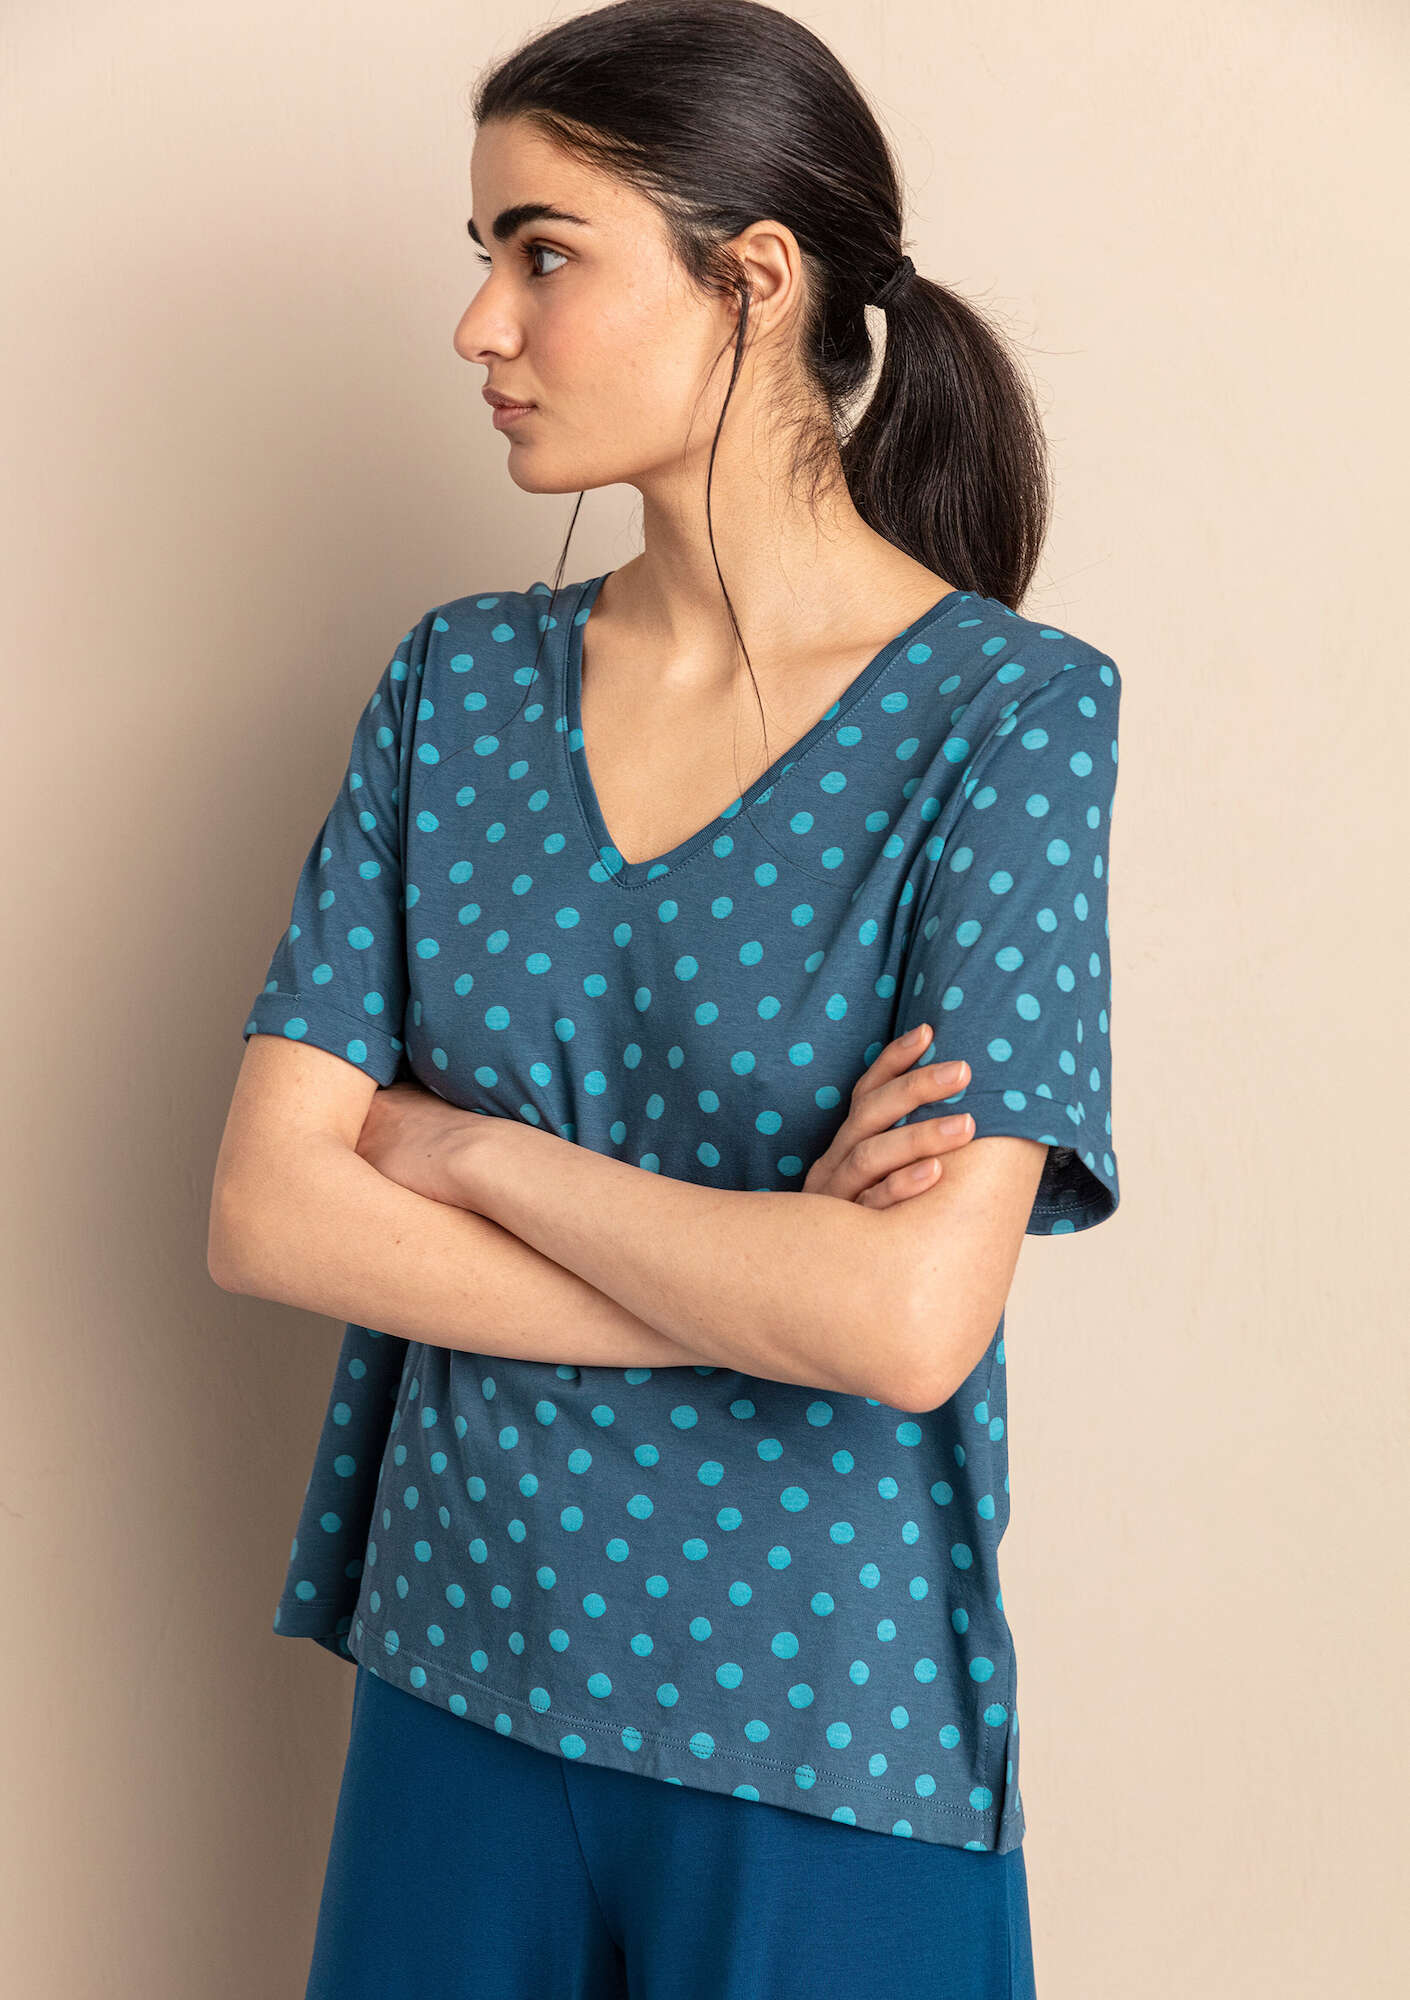 Juliet jersey top indigo/patterned